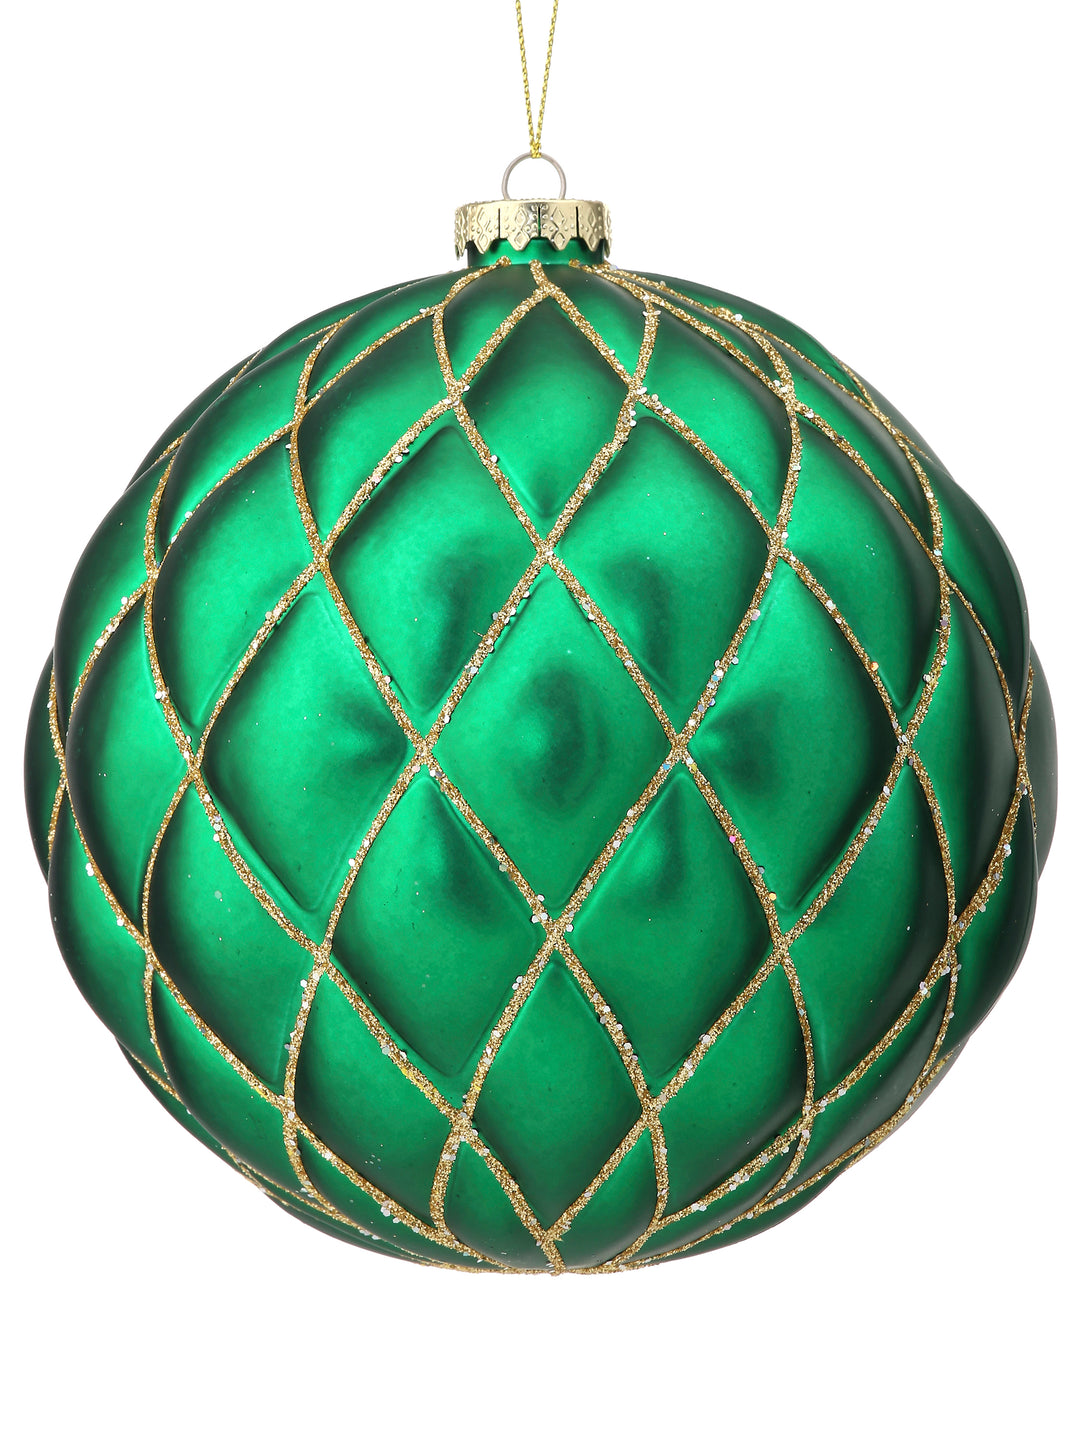 Regency 150 mm - 5.91" Matte Glitter Shatterproof Ornament in Green and Gold